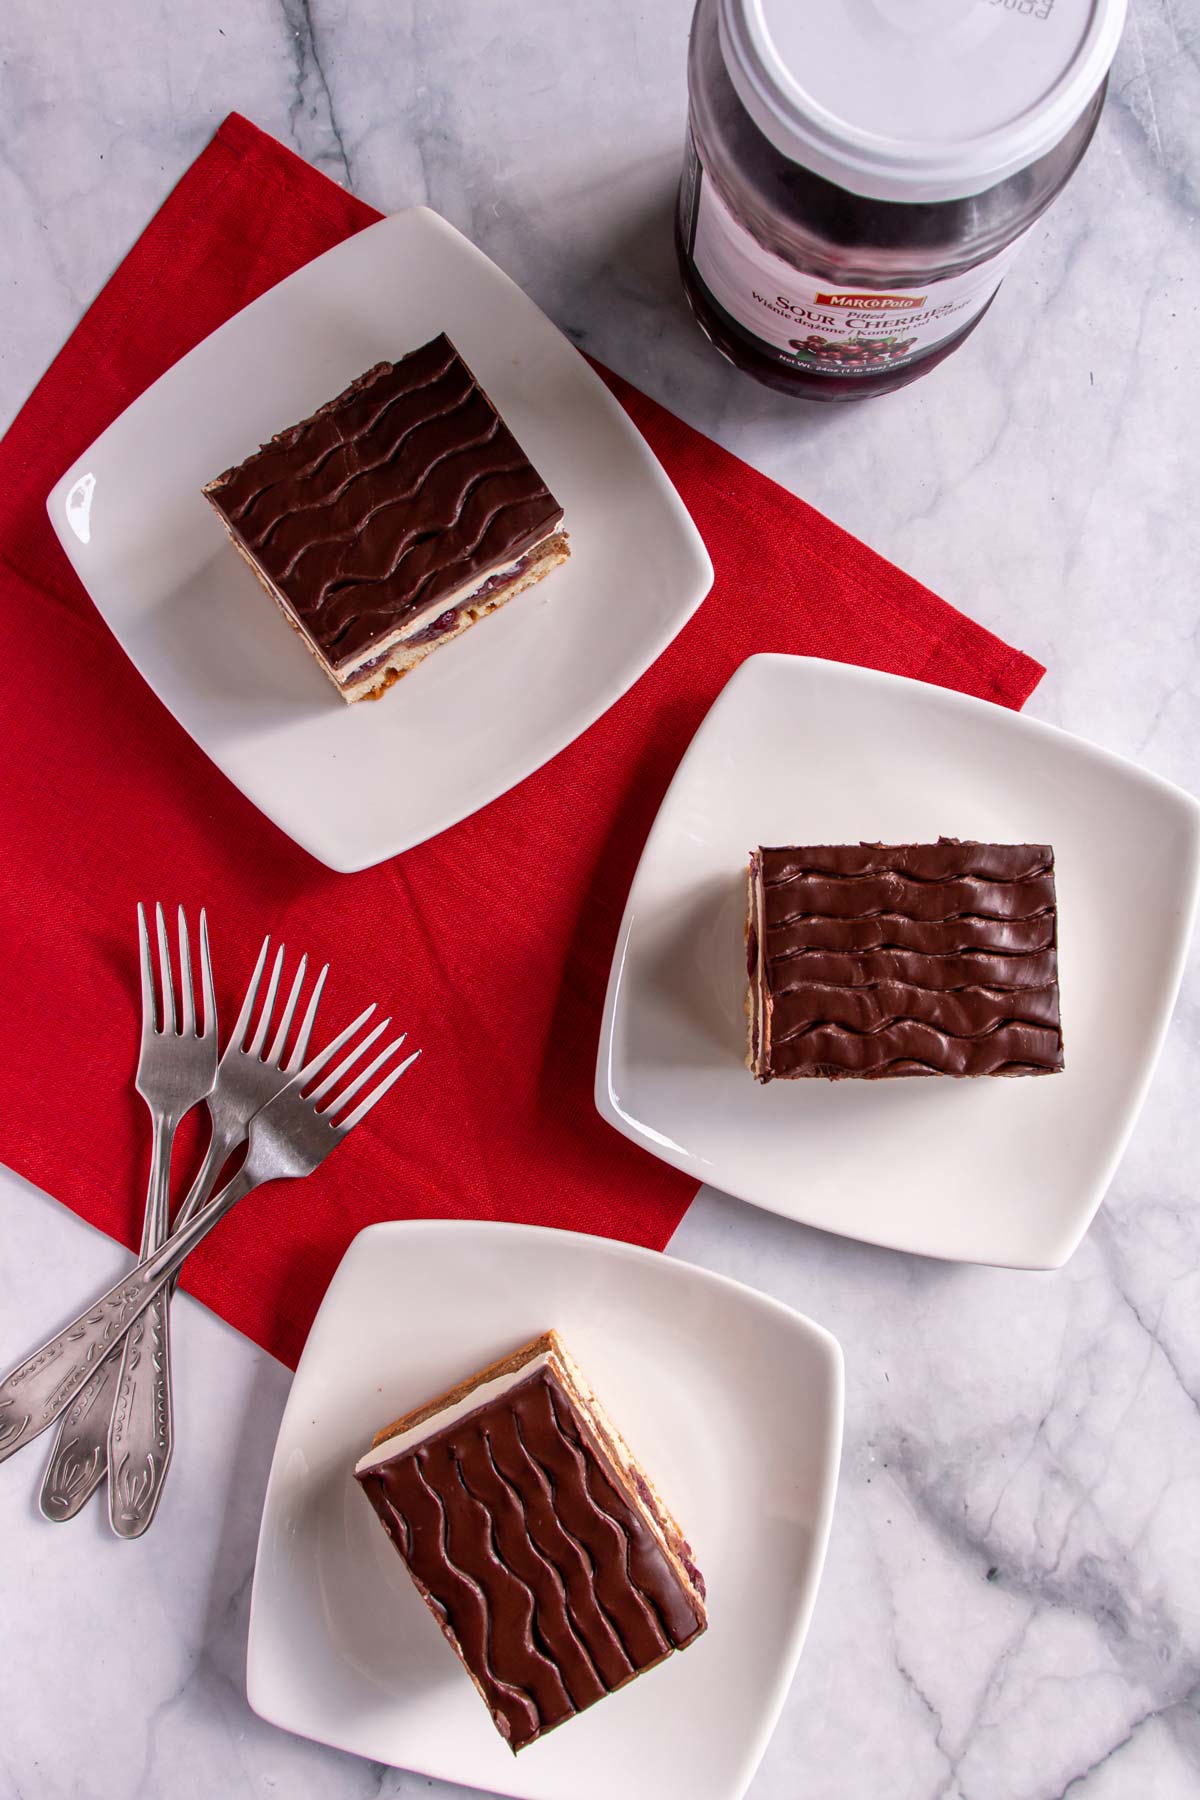 Three rectangular slices of cake with chocolate glaze on white square plates.